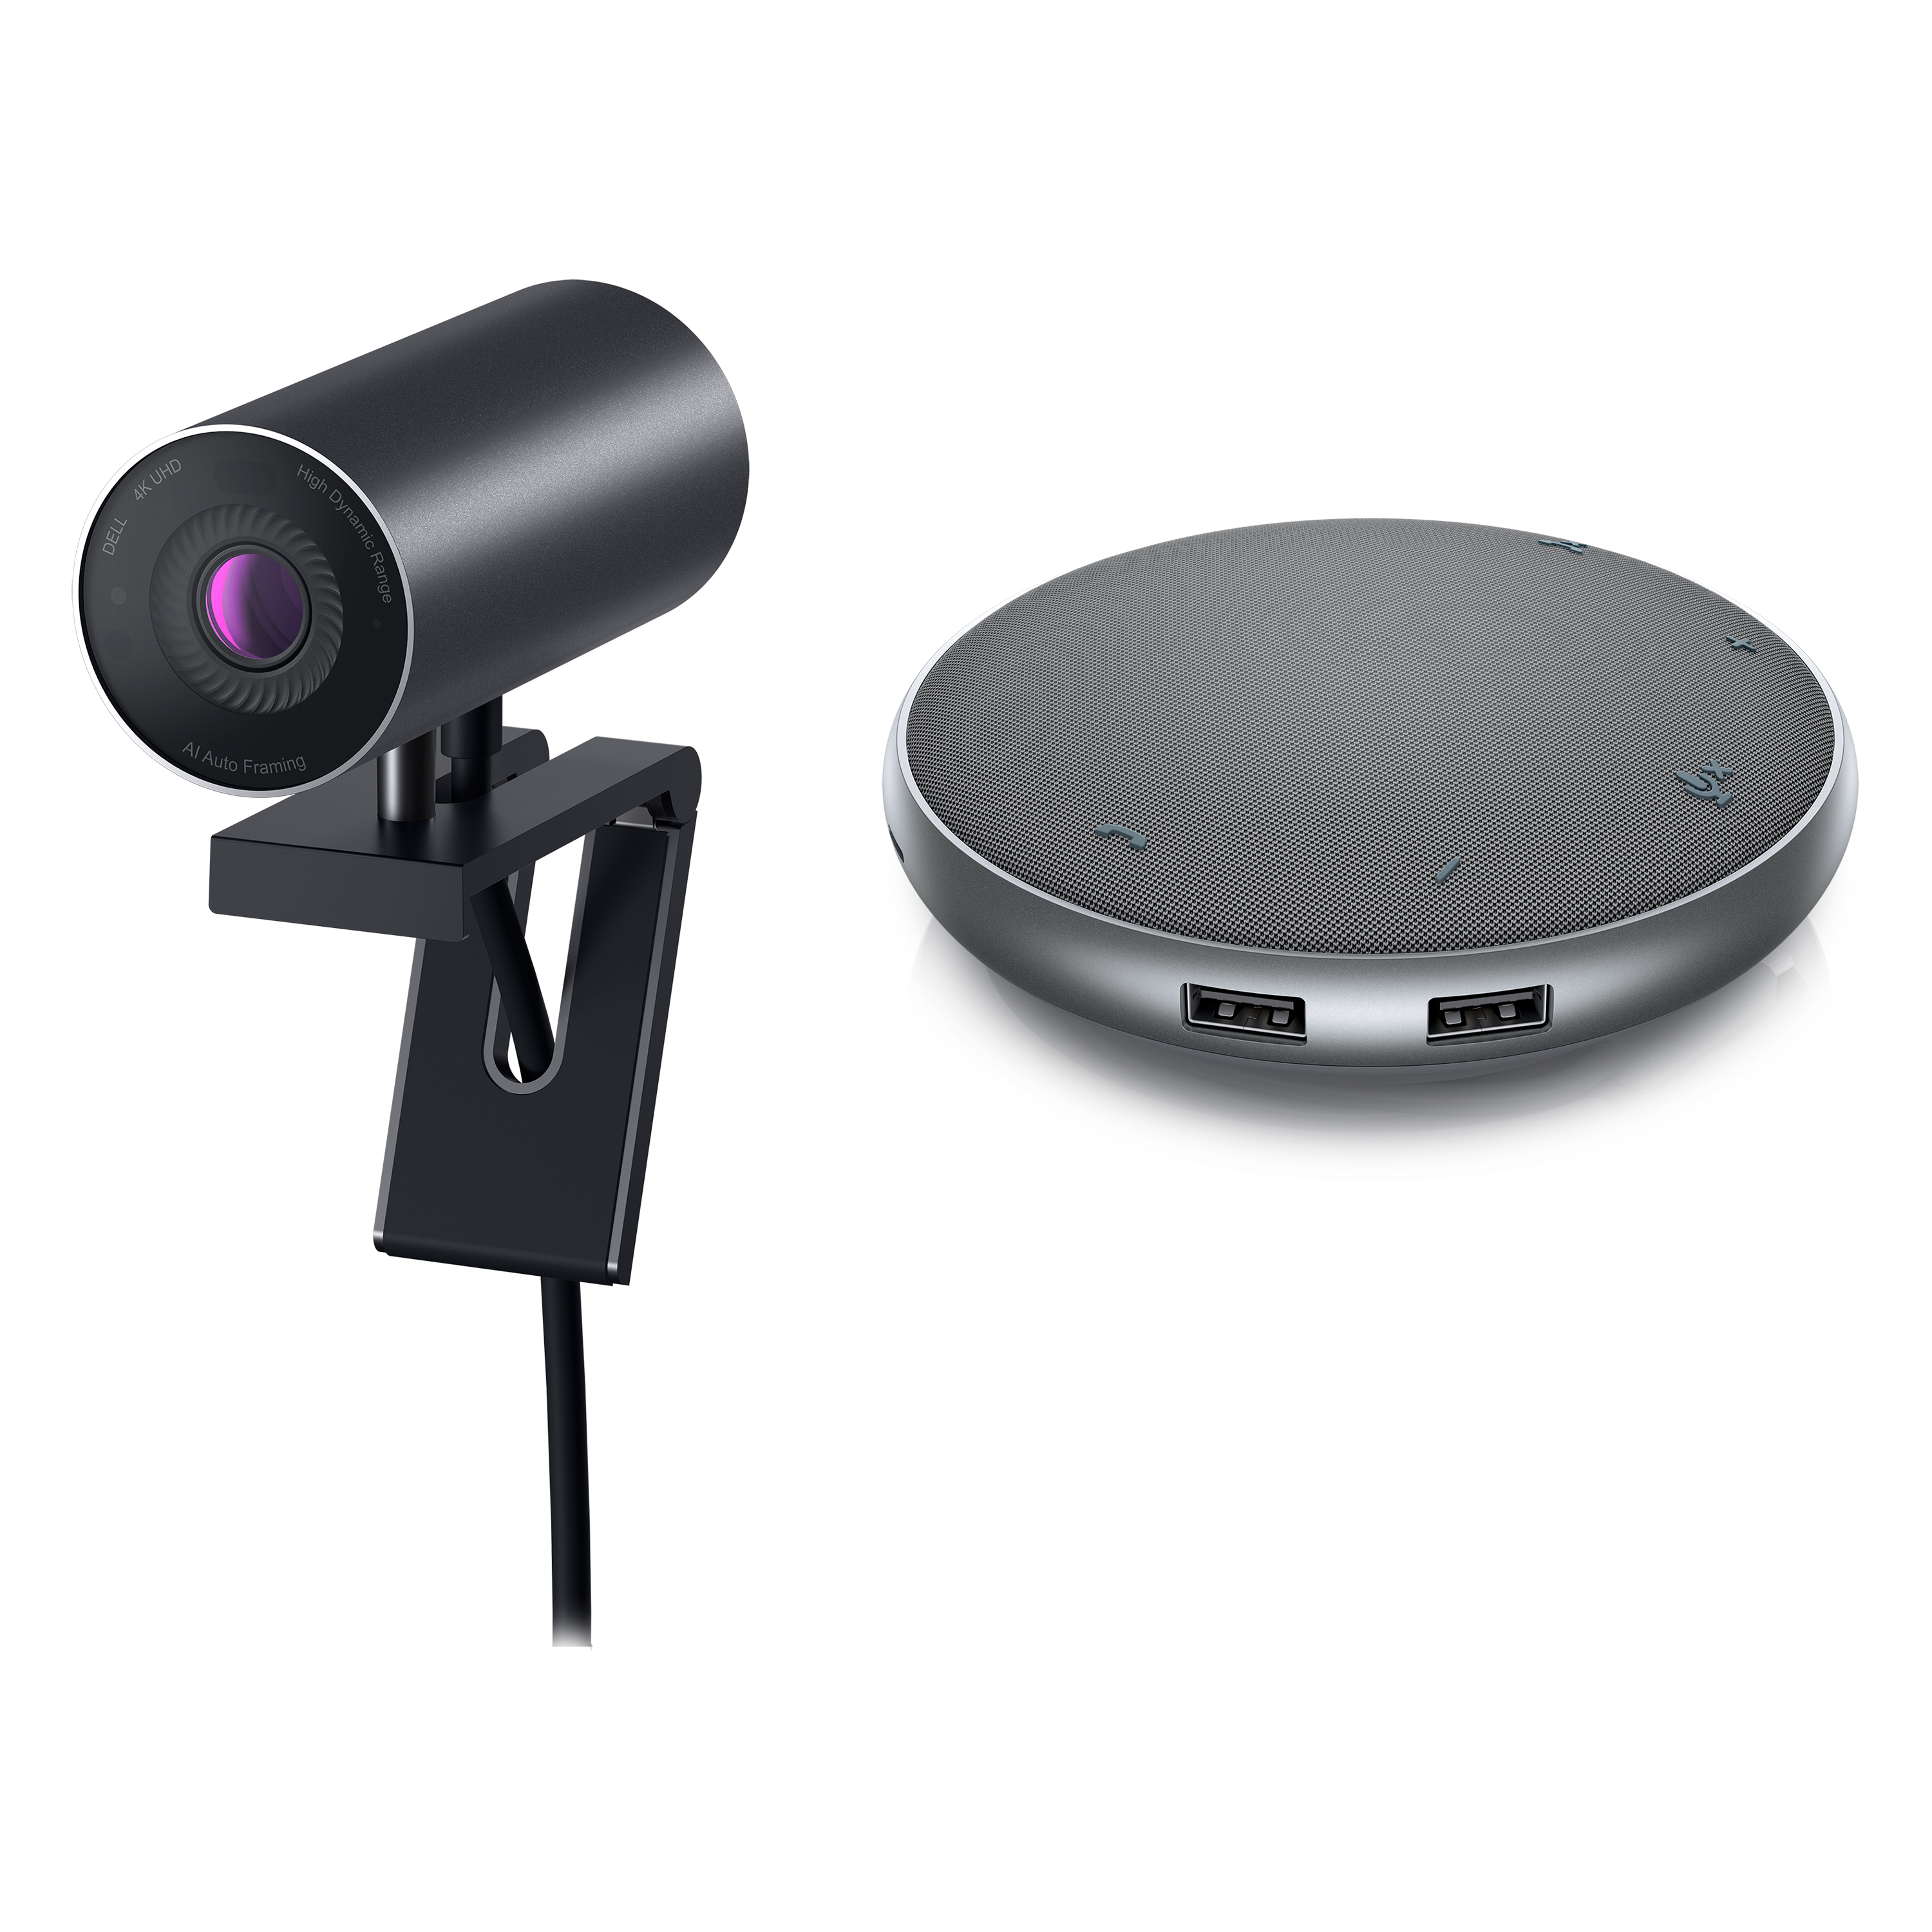 Dell UltraSharp Webcam and Dell Speakerphone | Dell USA